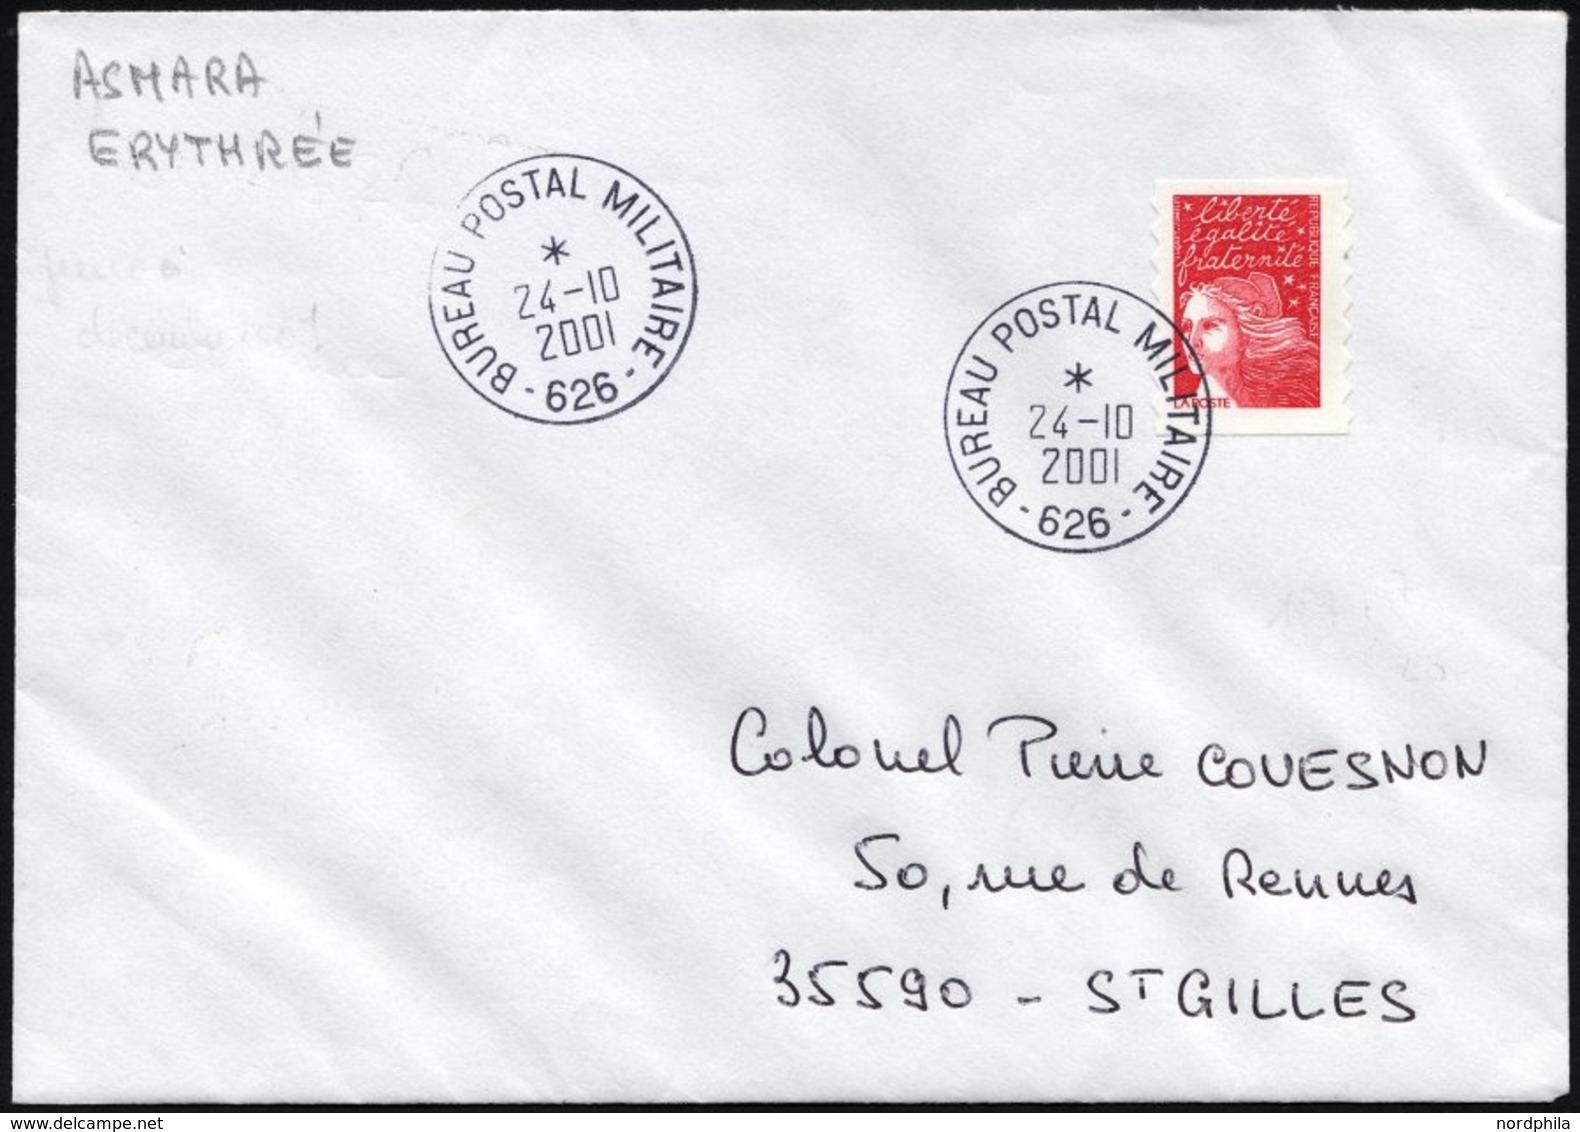 FRANKREICH FELDPOST 3558 BRIEF, 2001, Marianne Dunkelrosa Mit K1 BUREAU POSTAL MILITAIRE 626 Aus Asmara In Eritrea, Prac - Military Postmarks From 1900 (out Of Wars Periods)